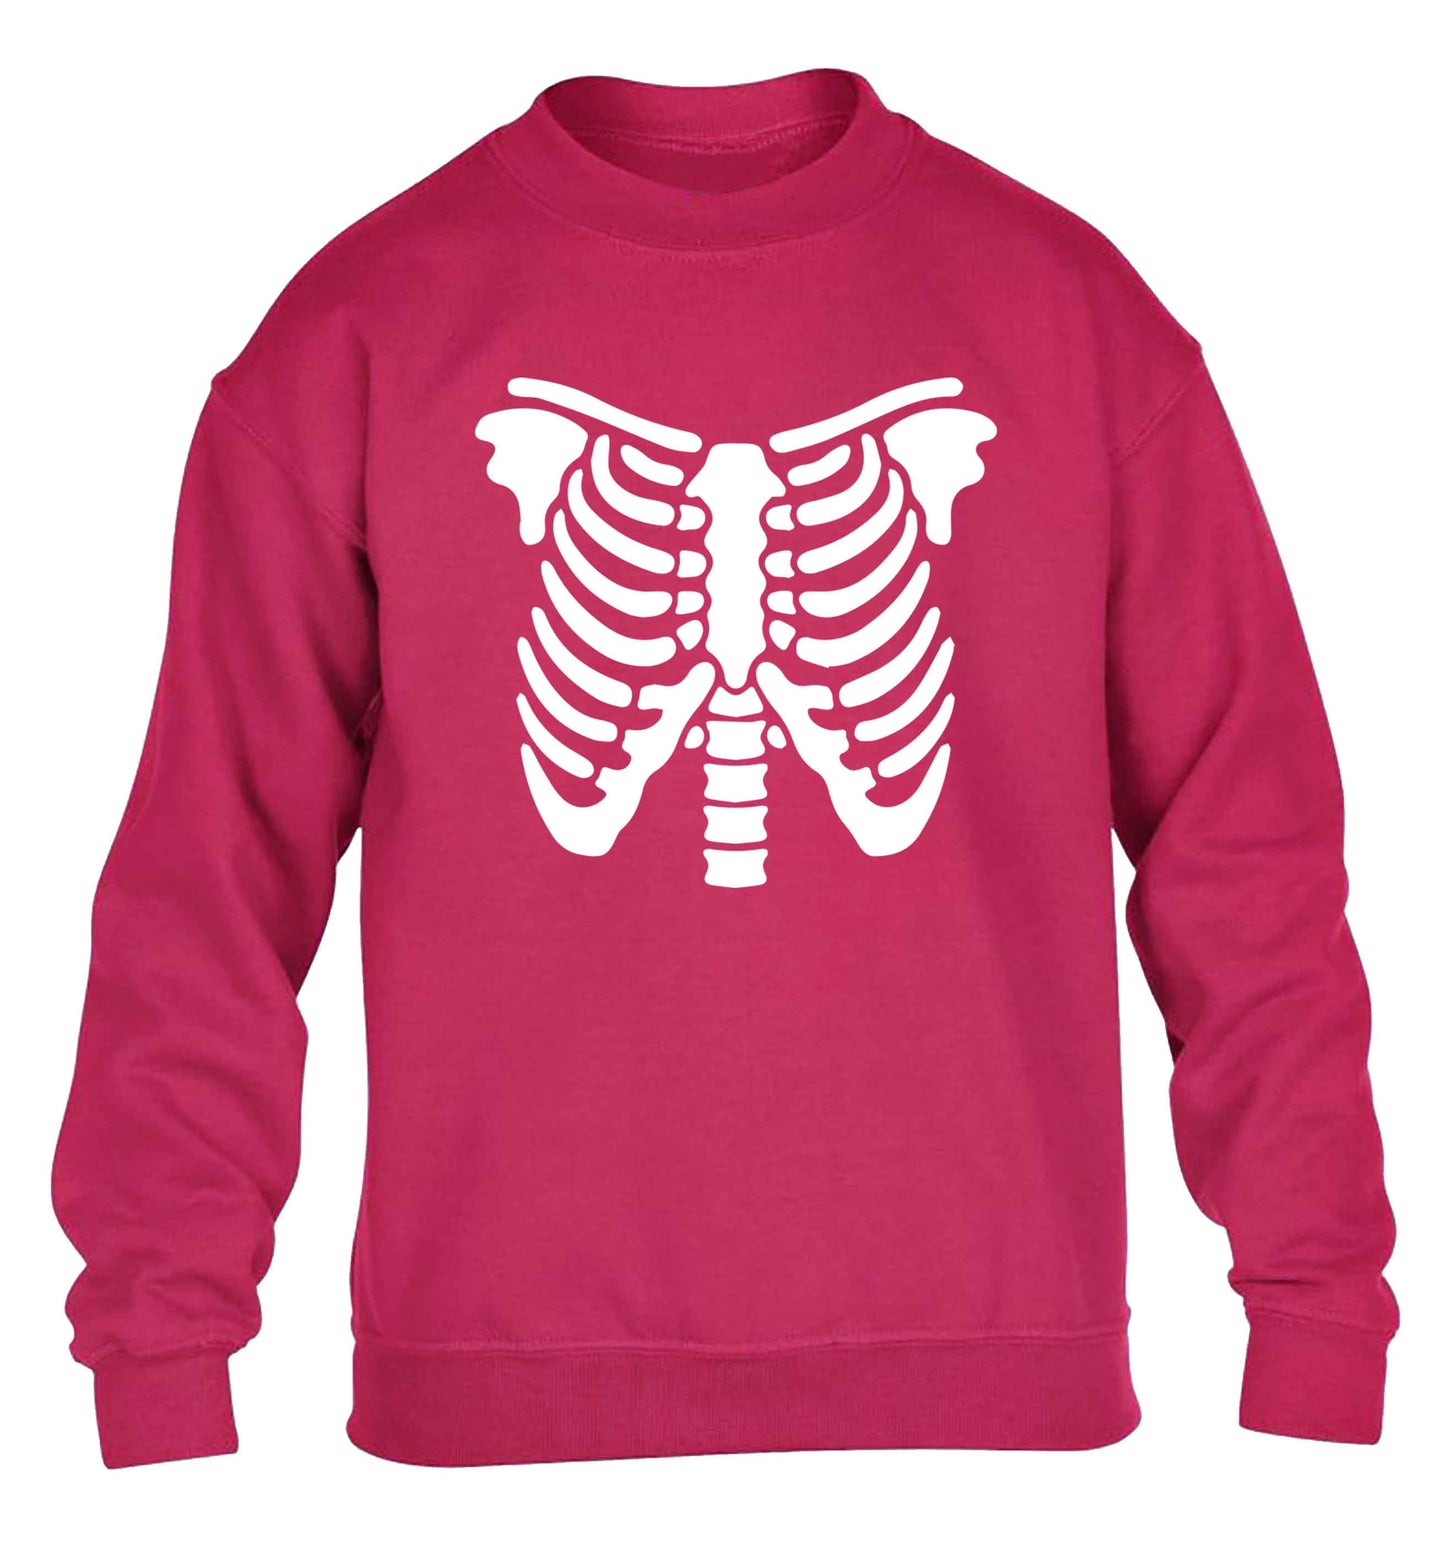 Skeleton ribcage children's pink sweater 12-13 Years